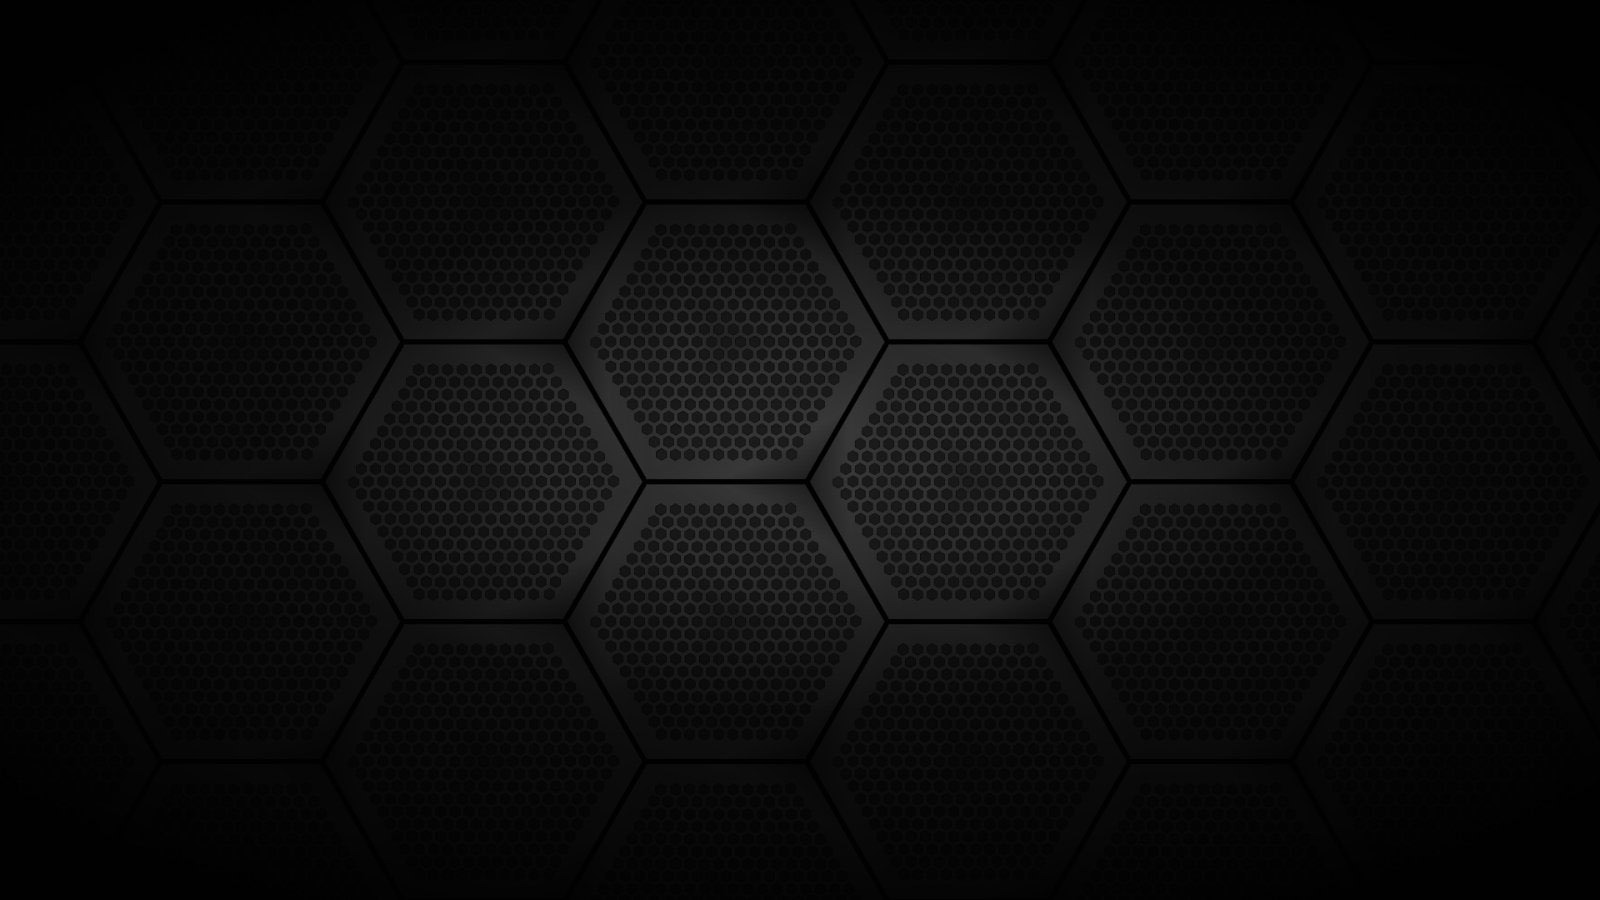 Free download Black Abstract For Desktop Background [1600x900] for your Desktop, Mobile & Tablet. Explore Abstract Black Background. Black And White Abstract Wallpaper, Abstract Black Wallpaper, Cool Black Background Wallpaper